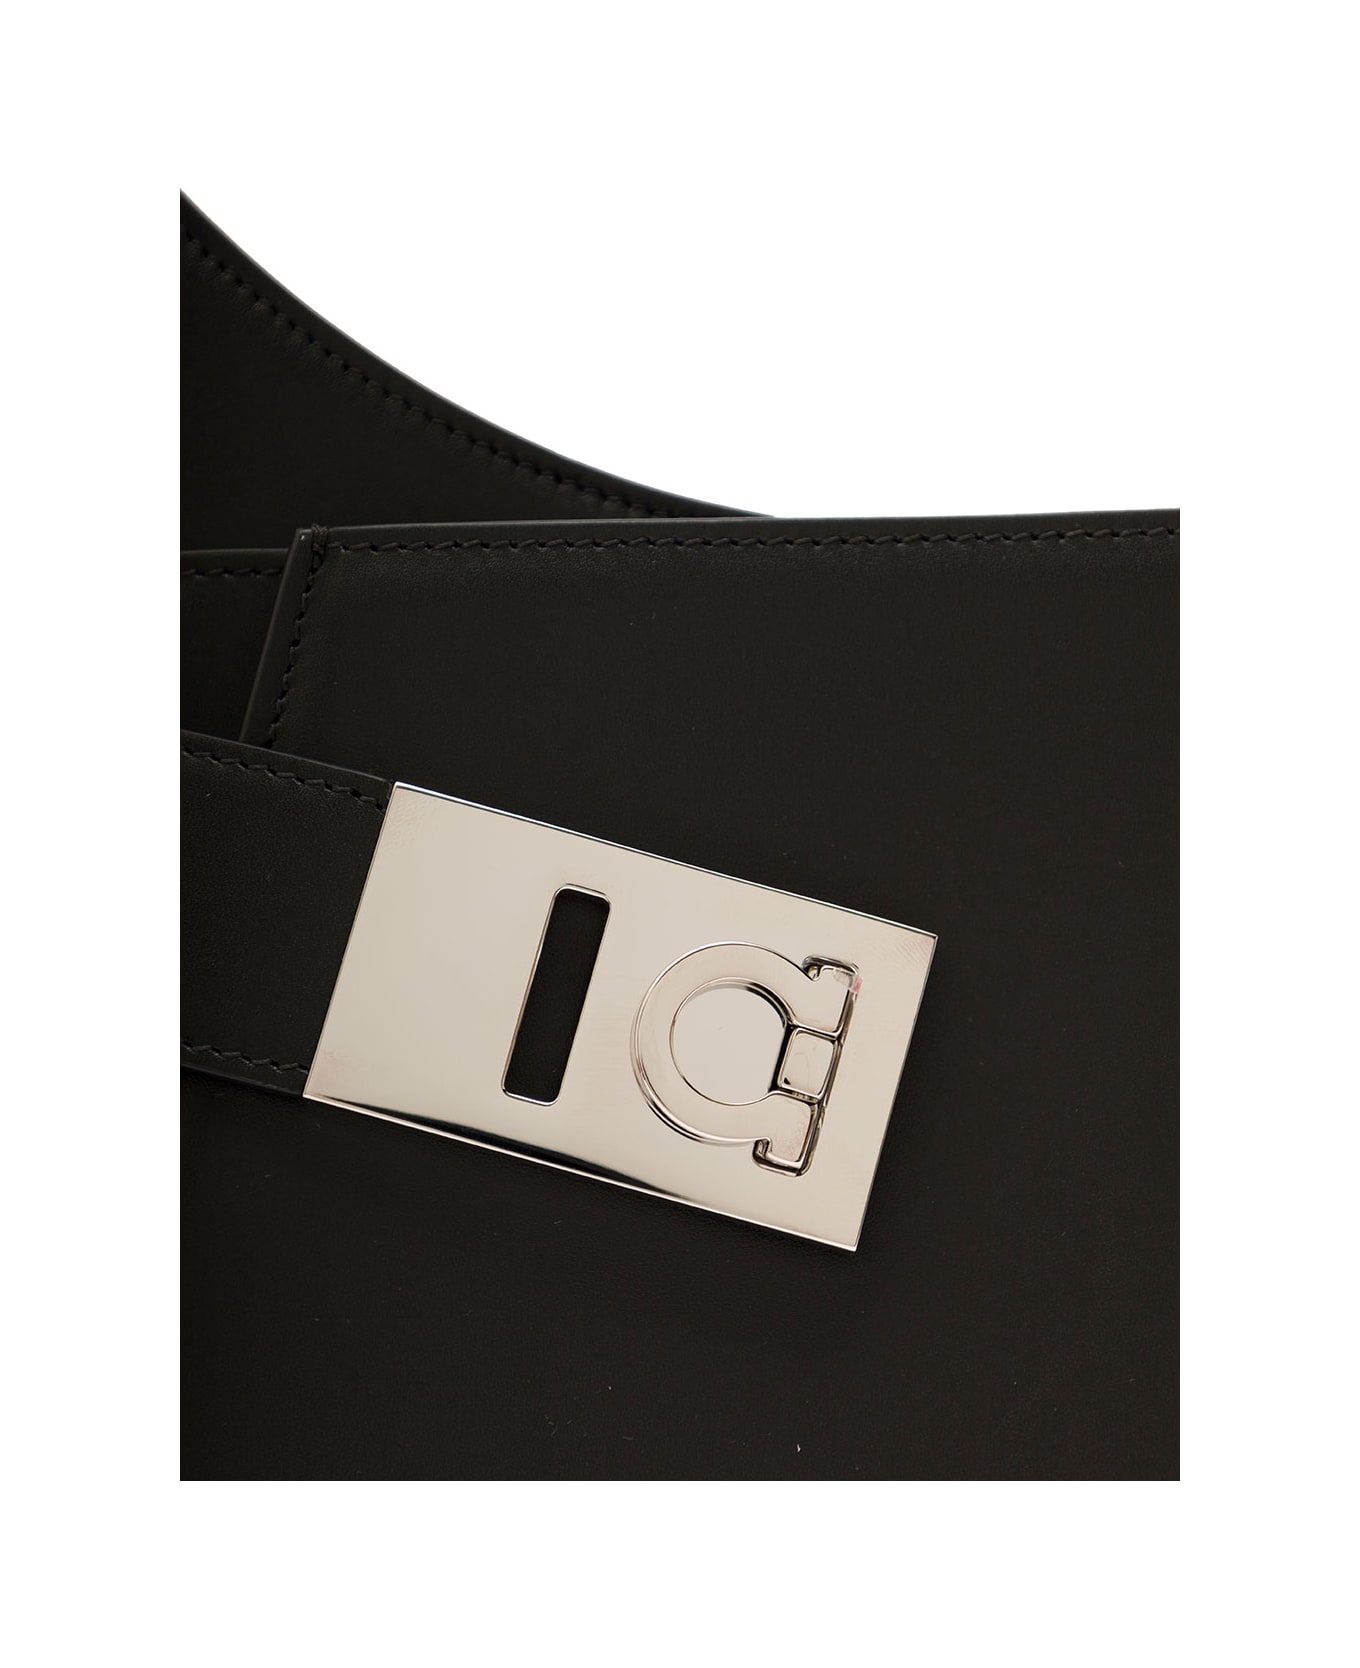 Ferragamo Black Hobo Shoulder Bag With Asymmetric Pocket And Gancini Buckle In Leather Woman - Black トートバッグ